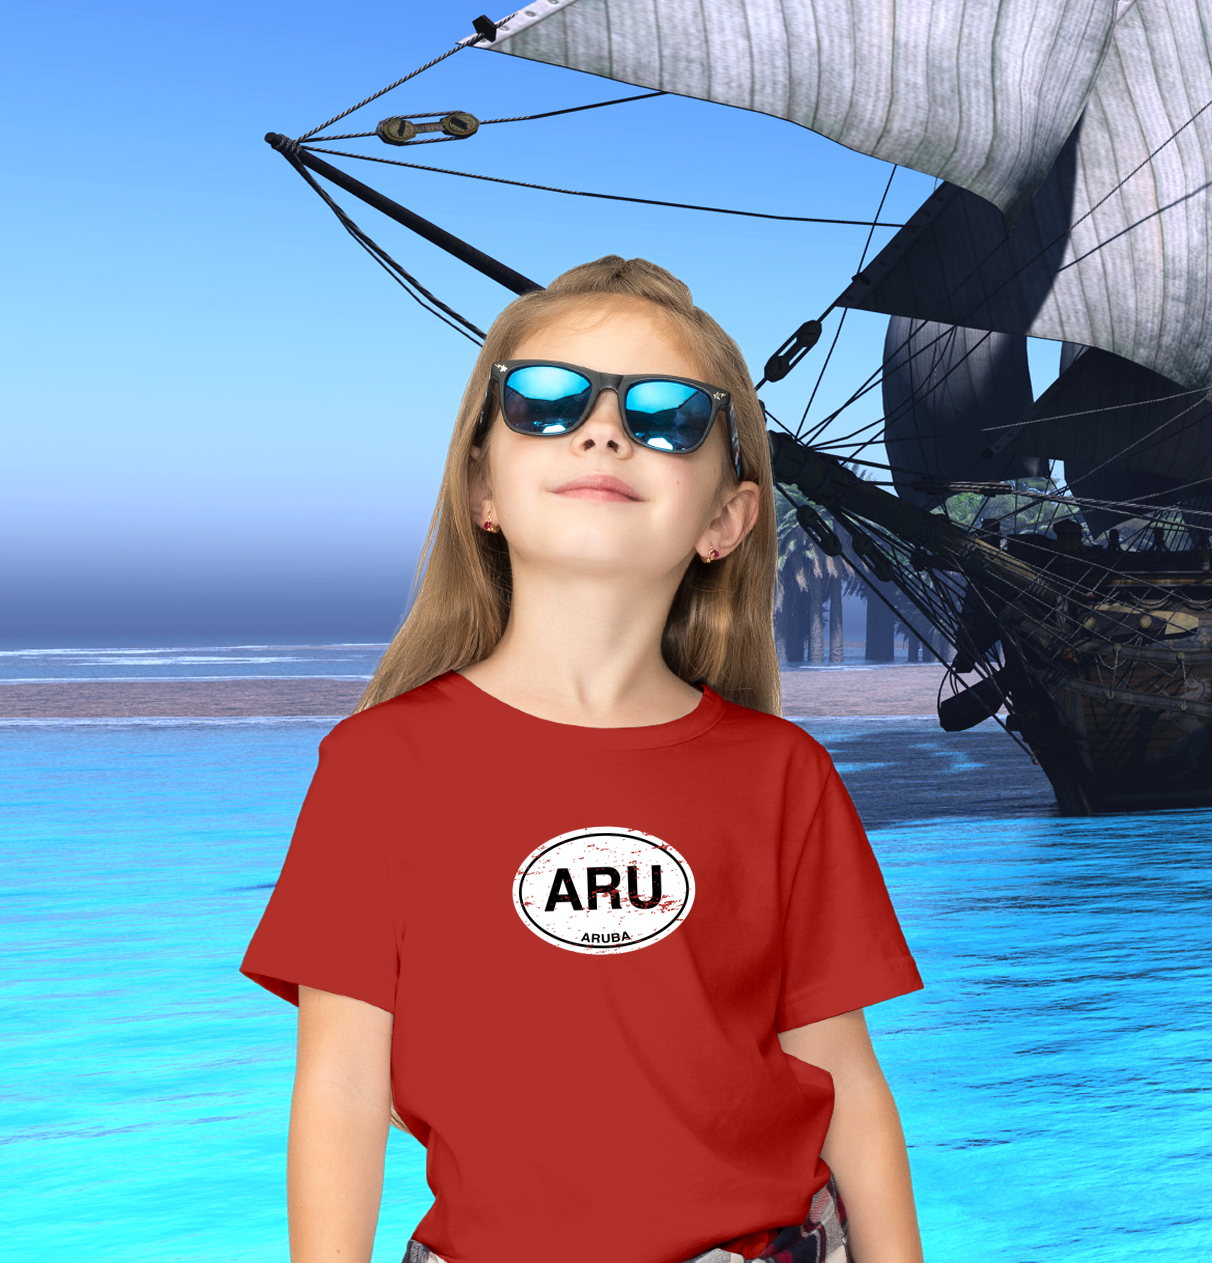 Aruba Classic Youth T-Shirt - My Destination Location